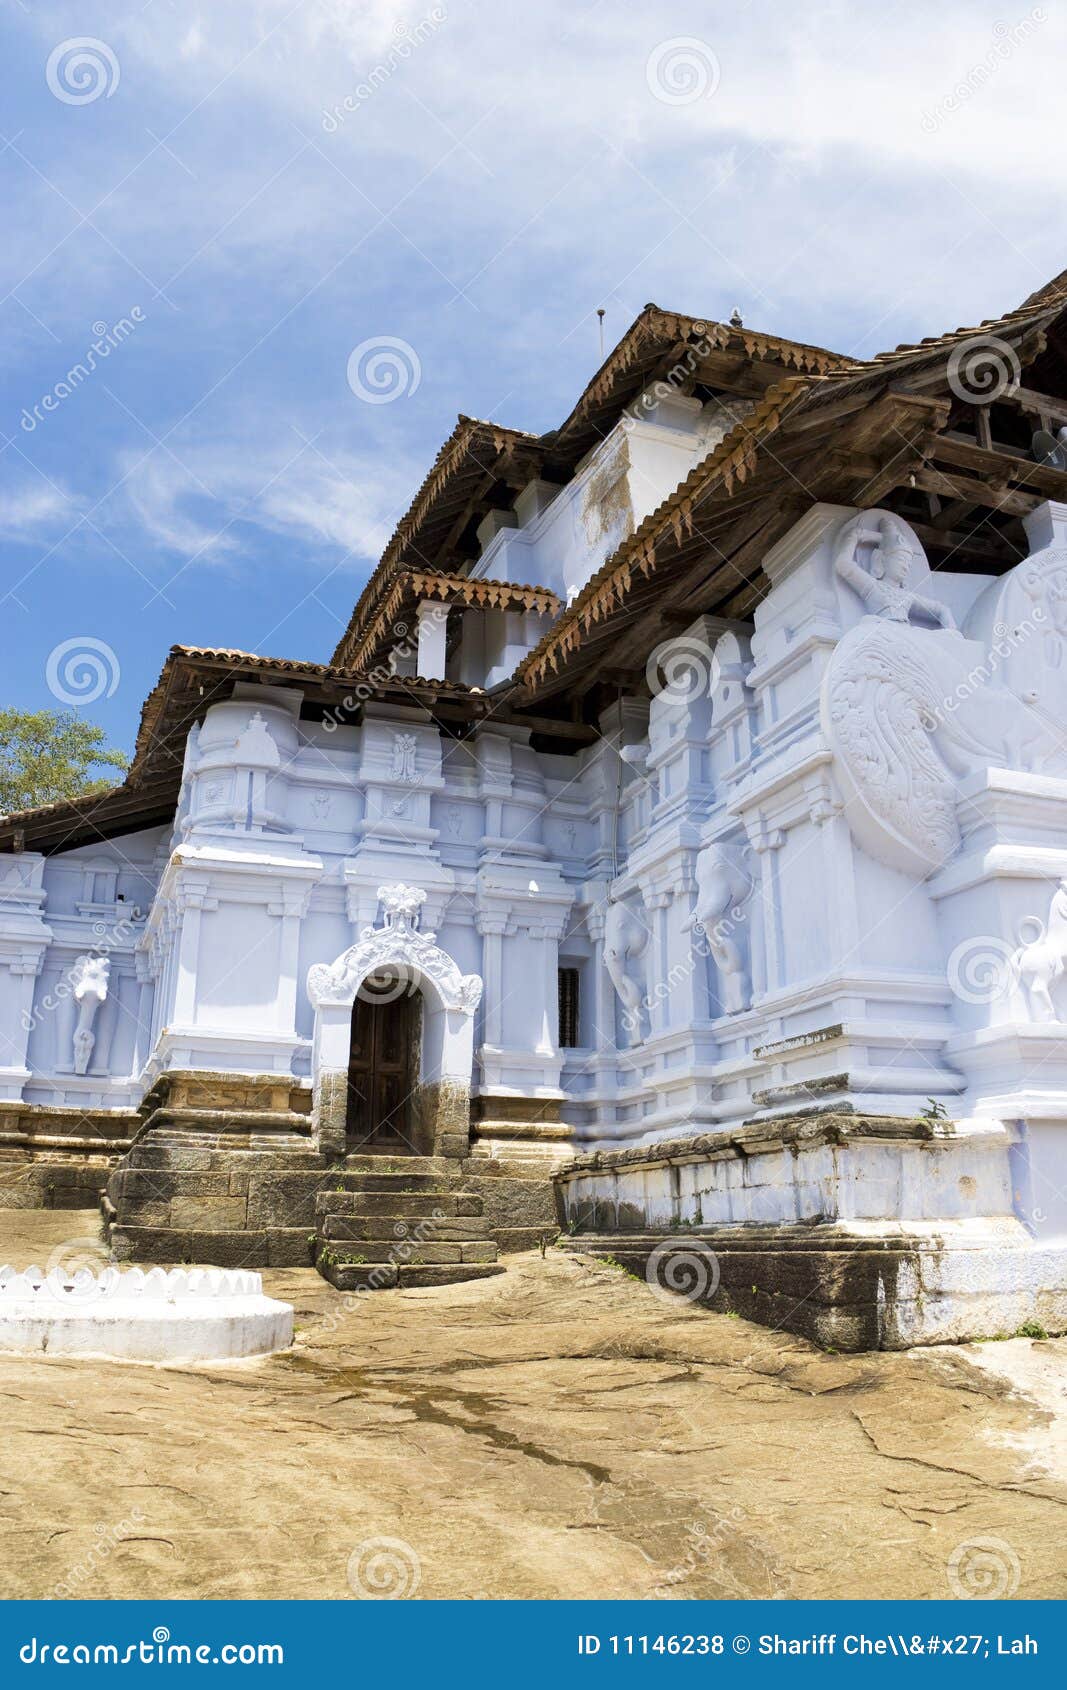 lankathilaka viharaya temple, kandy, sri lanka